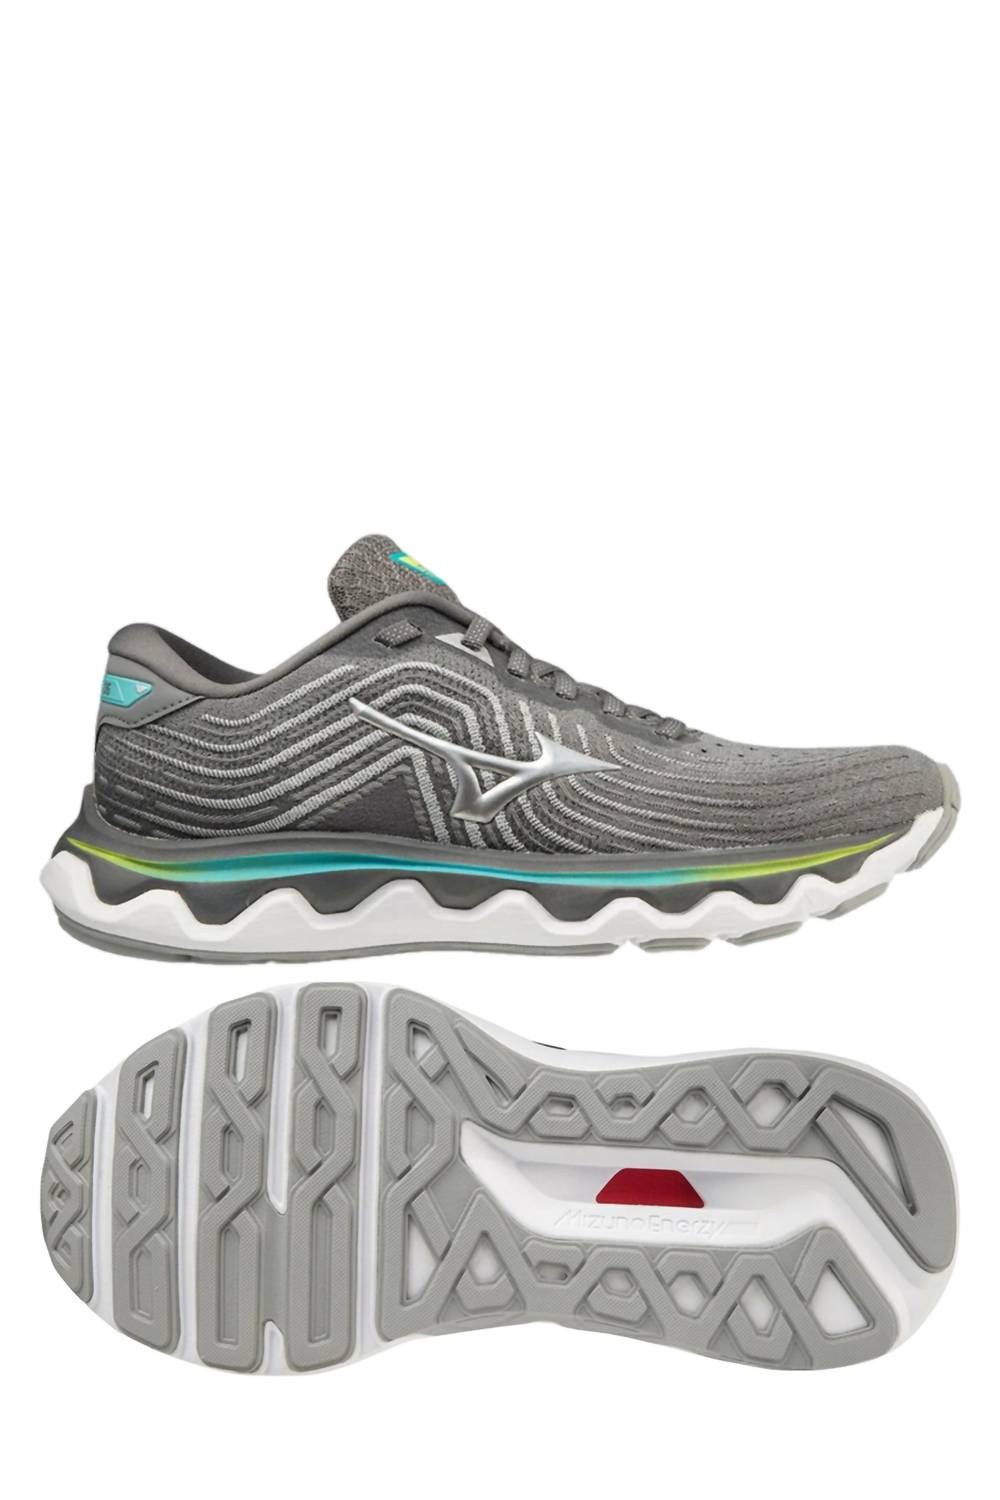 Mizuno Women's Wave Horizon 6 Running Shoes - B/medium Width In Ultimate Grey/silver In Gray